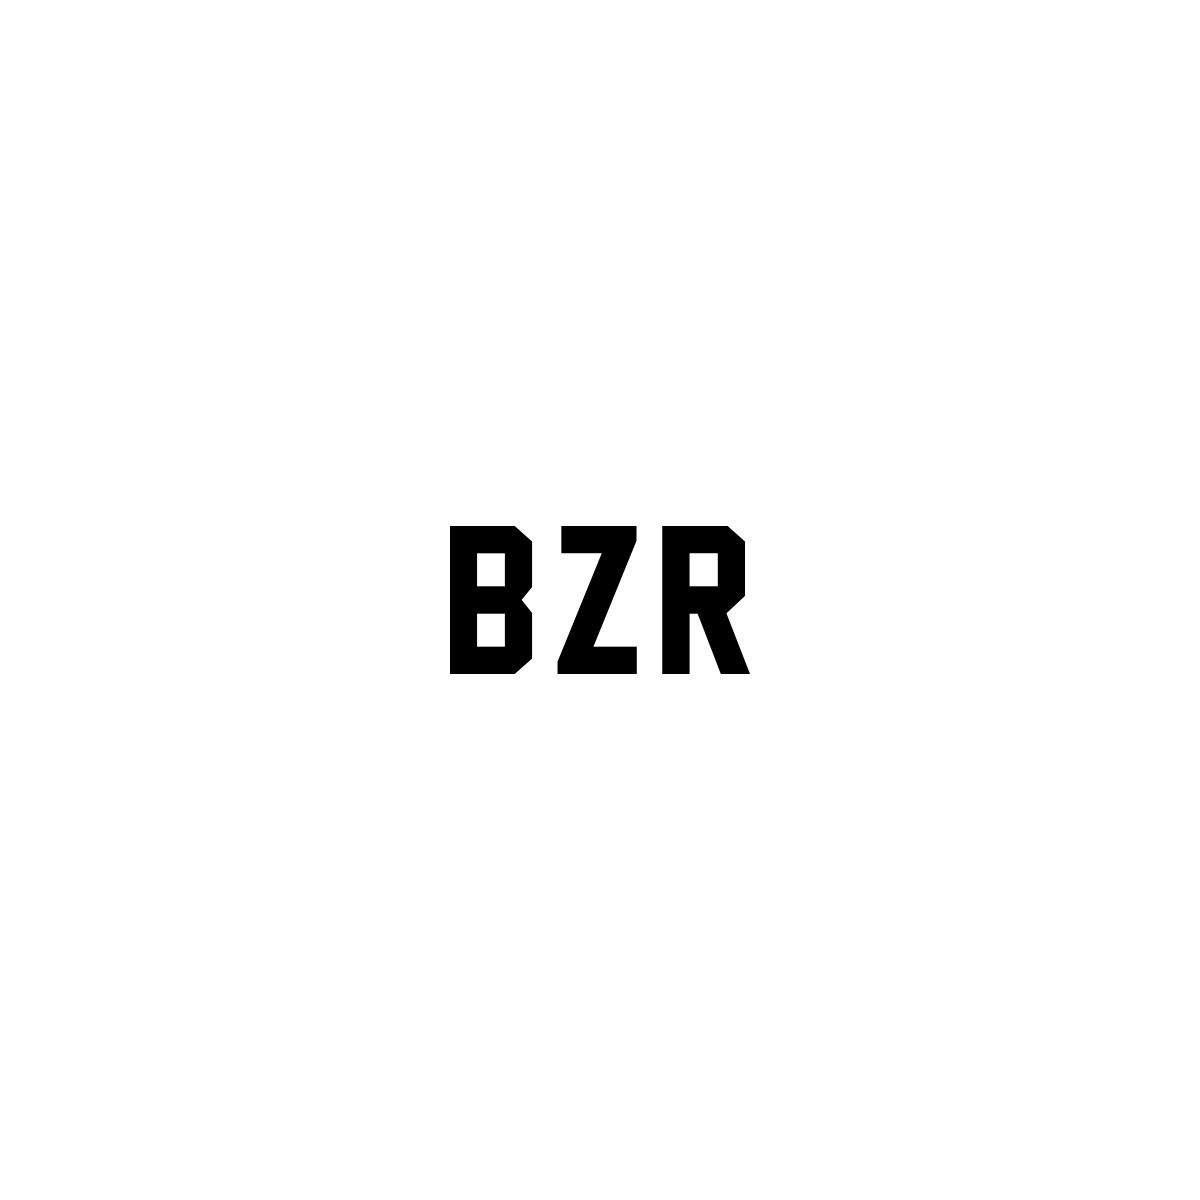 BZR Online